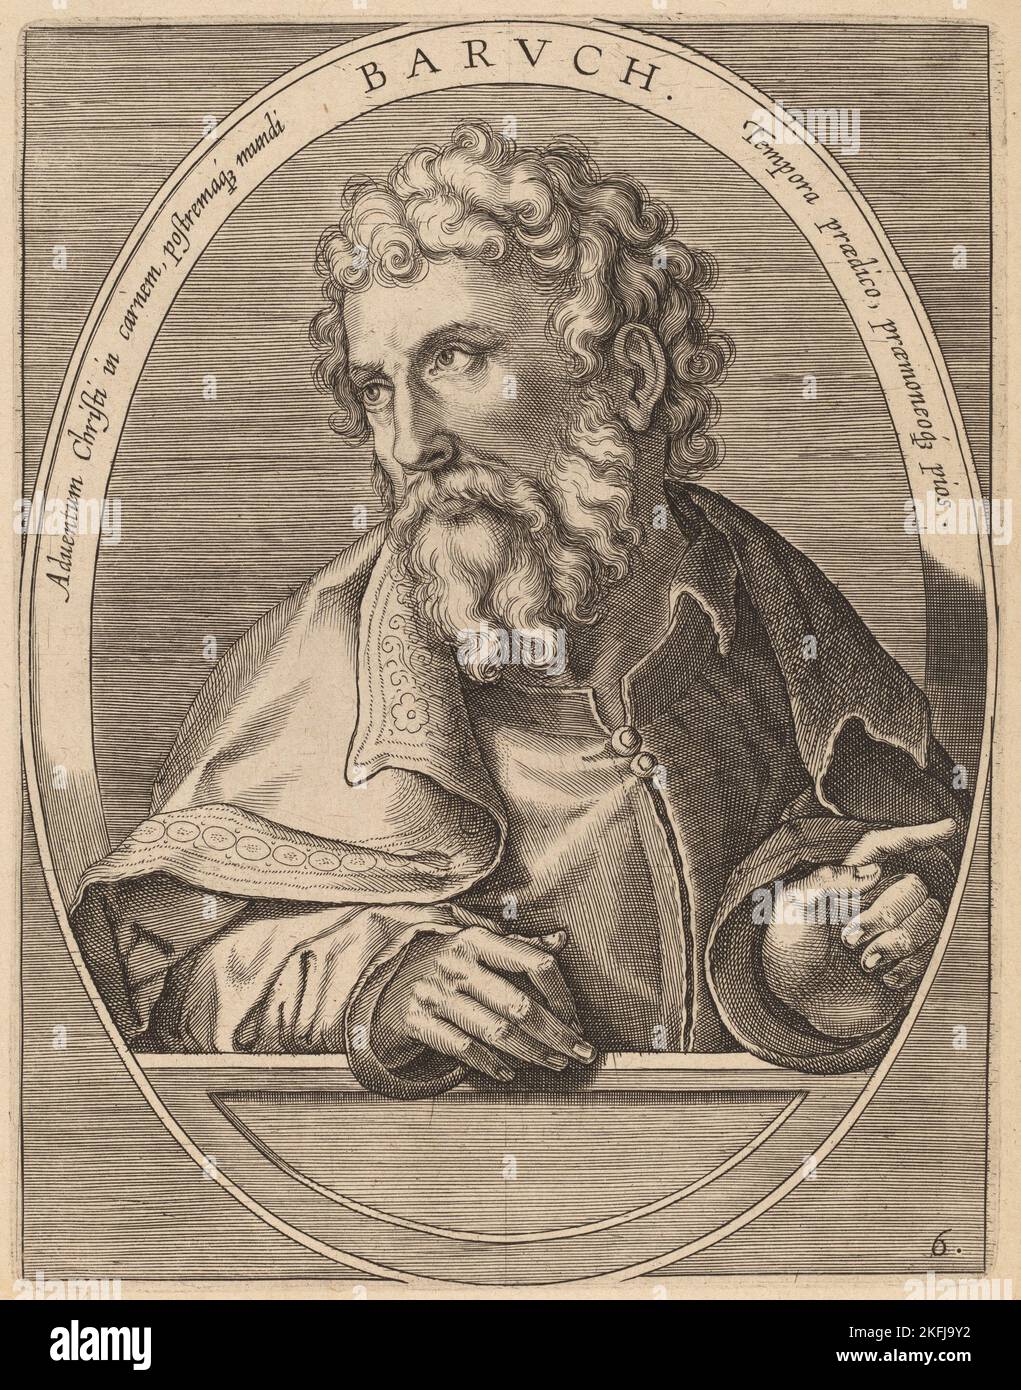 Baruch, published 1613. Stock Photo